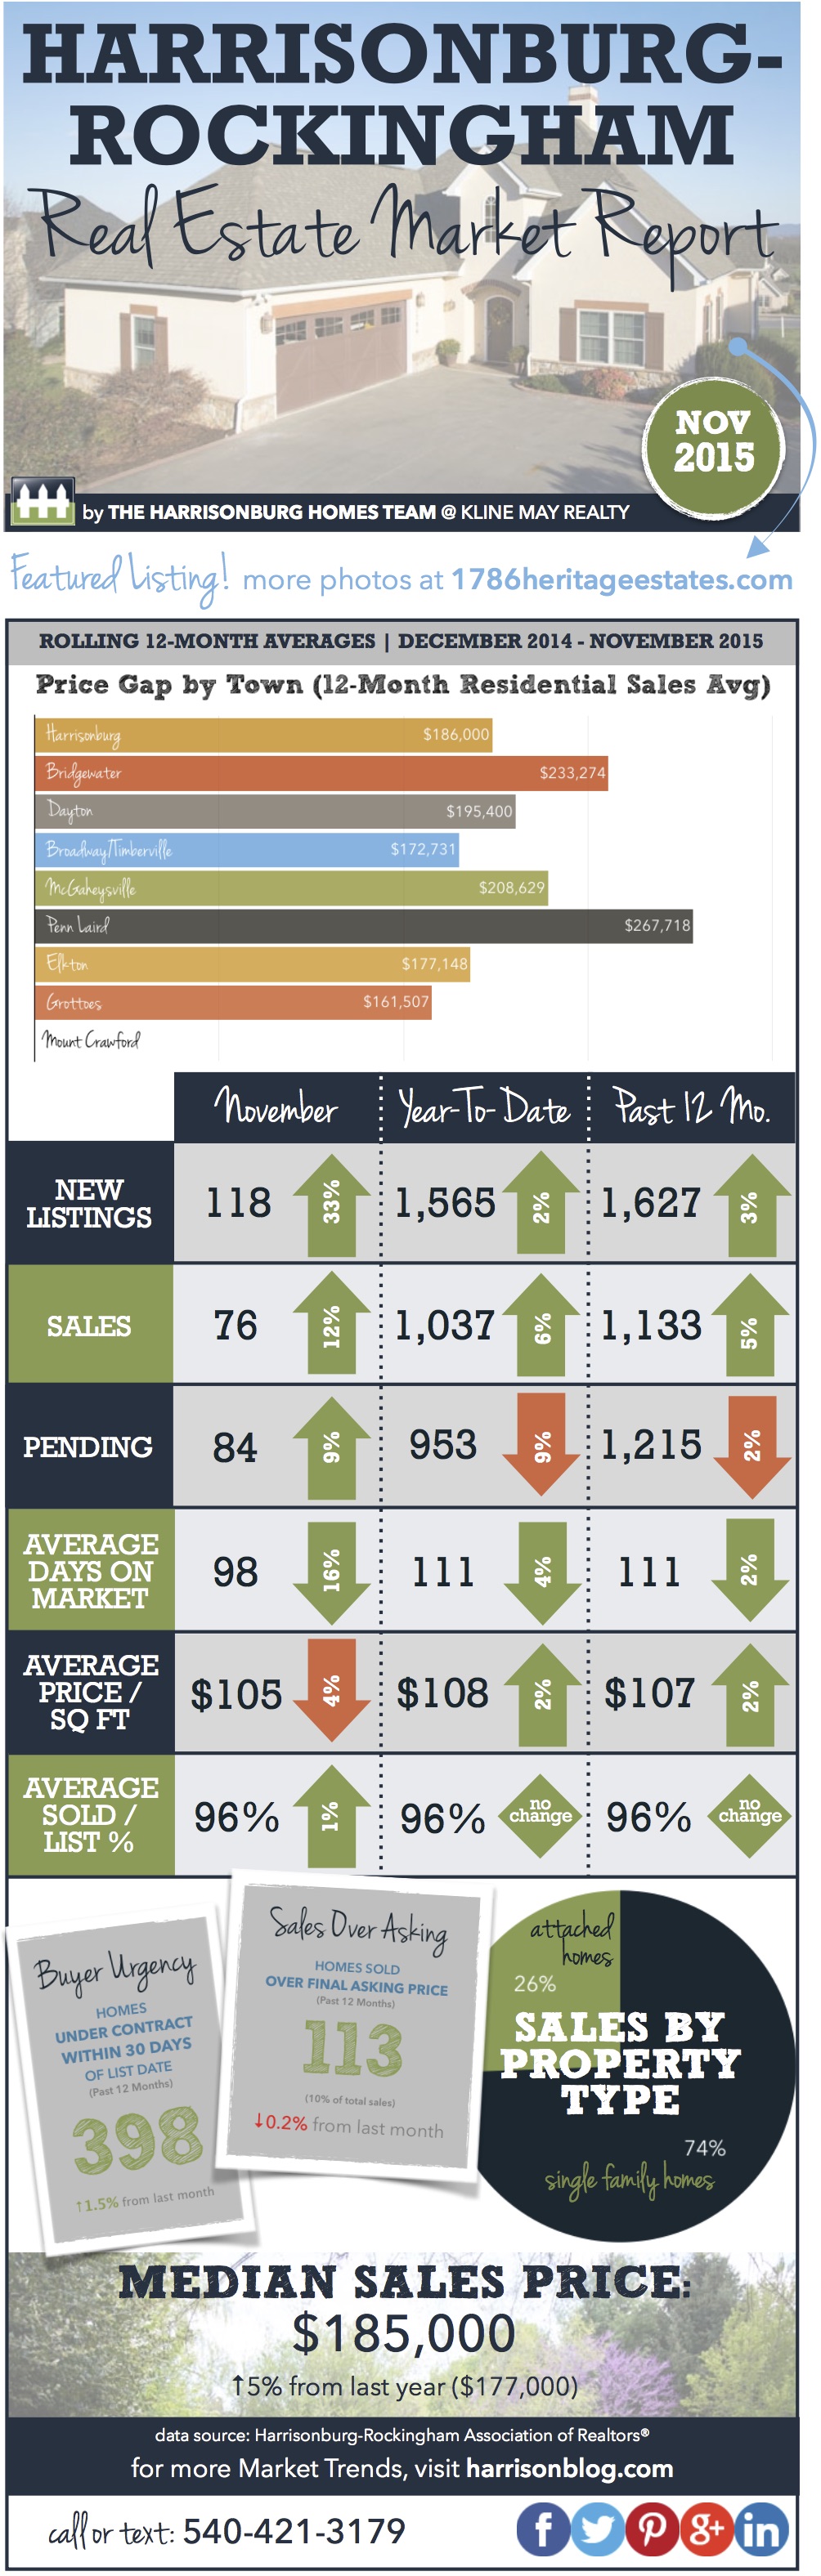 Harrisonburg Real Estate Market Report [INFOGRAPHIC]: November 2015